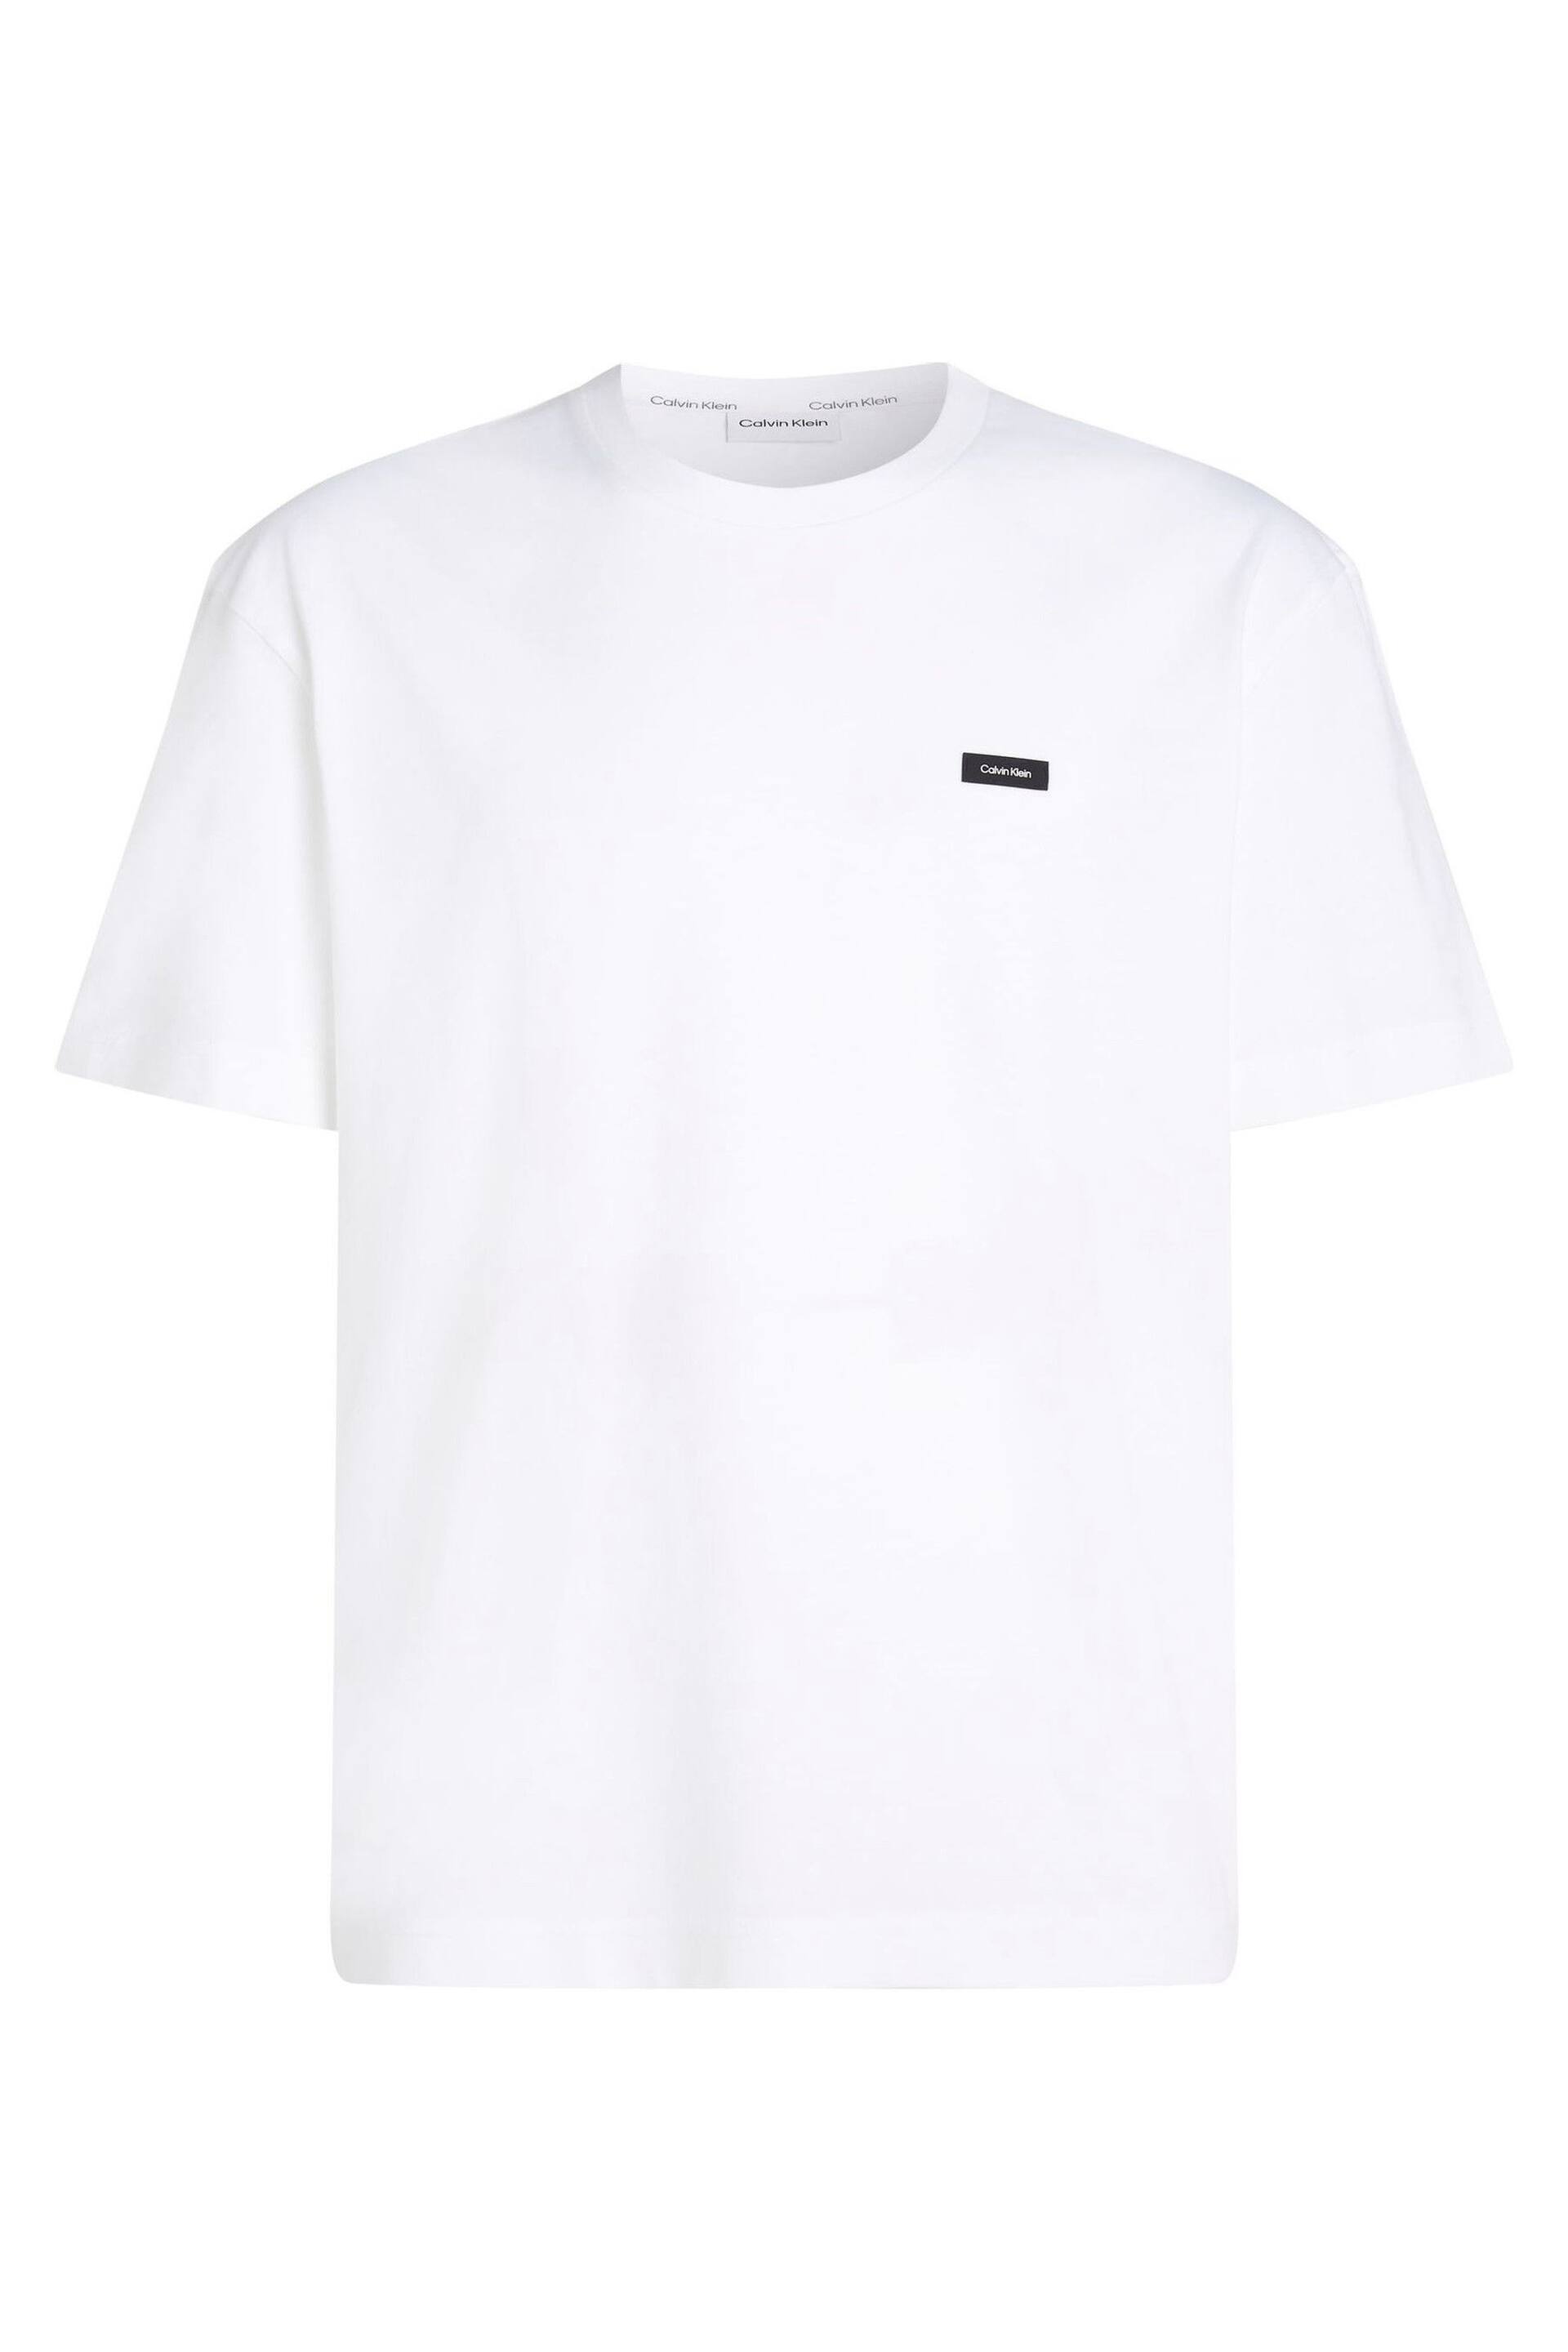 Calvin Klein White Logo T-Shirt - Image 4 of 4